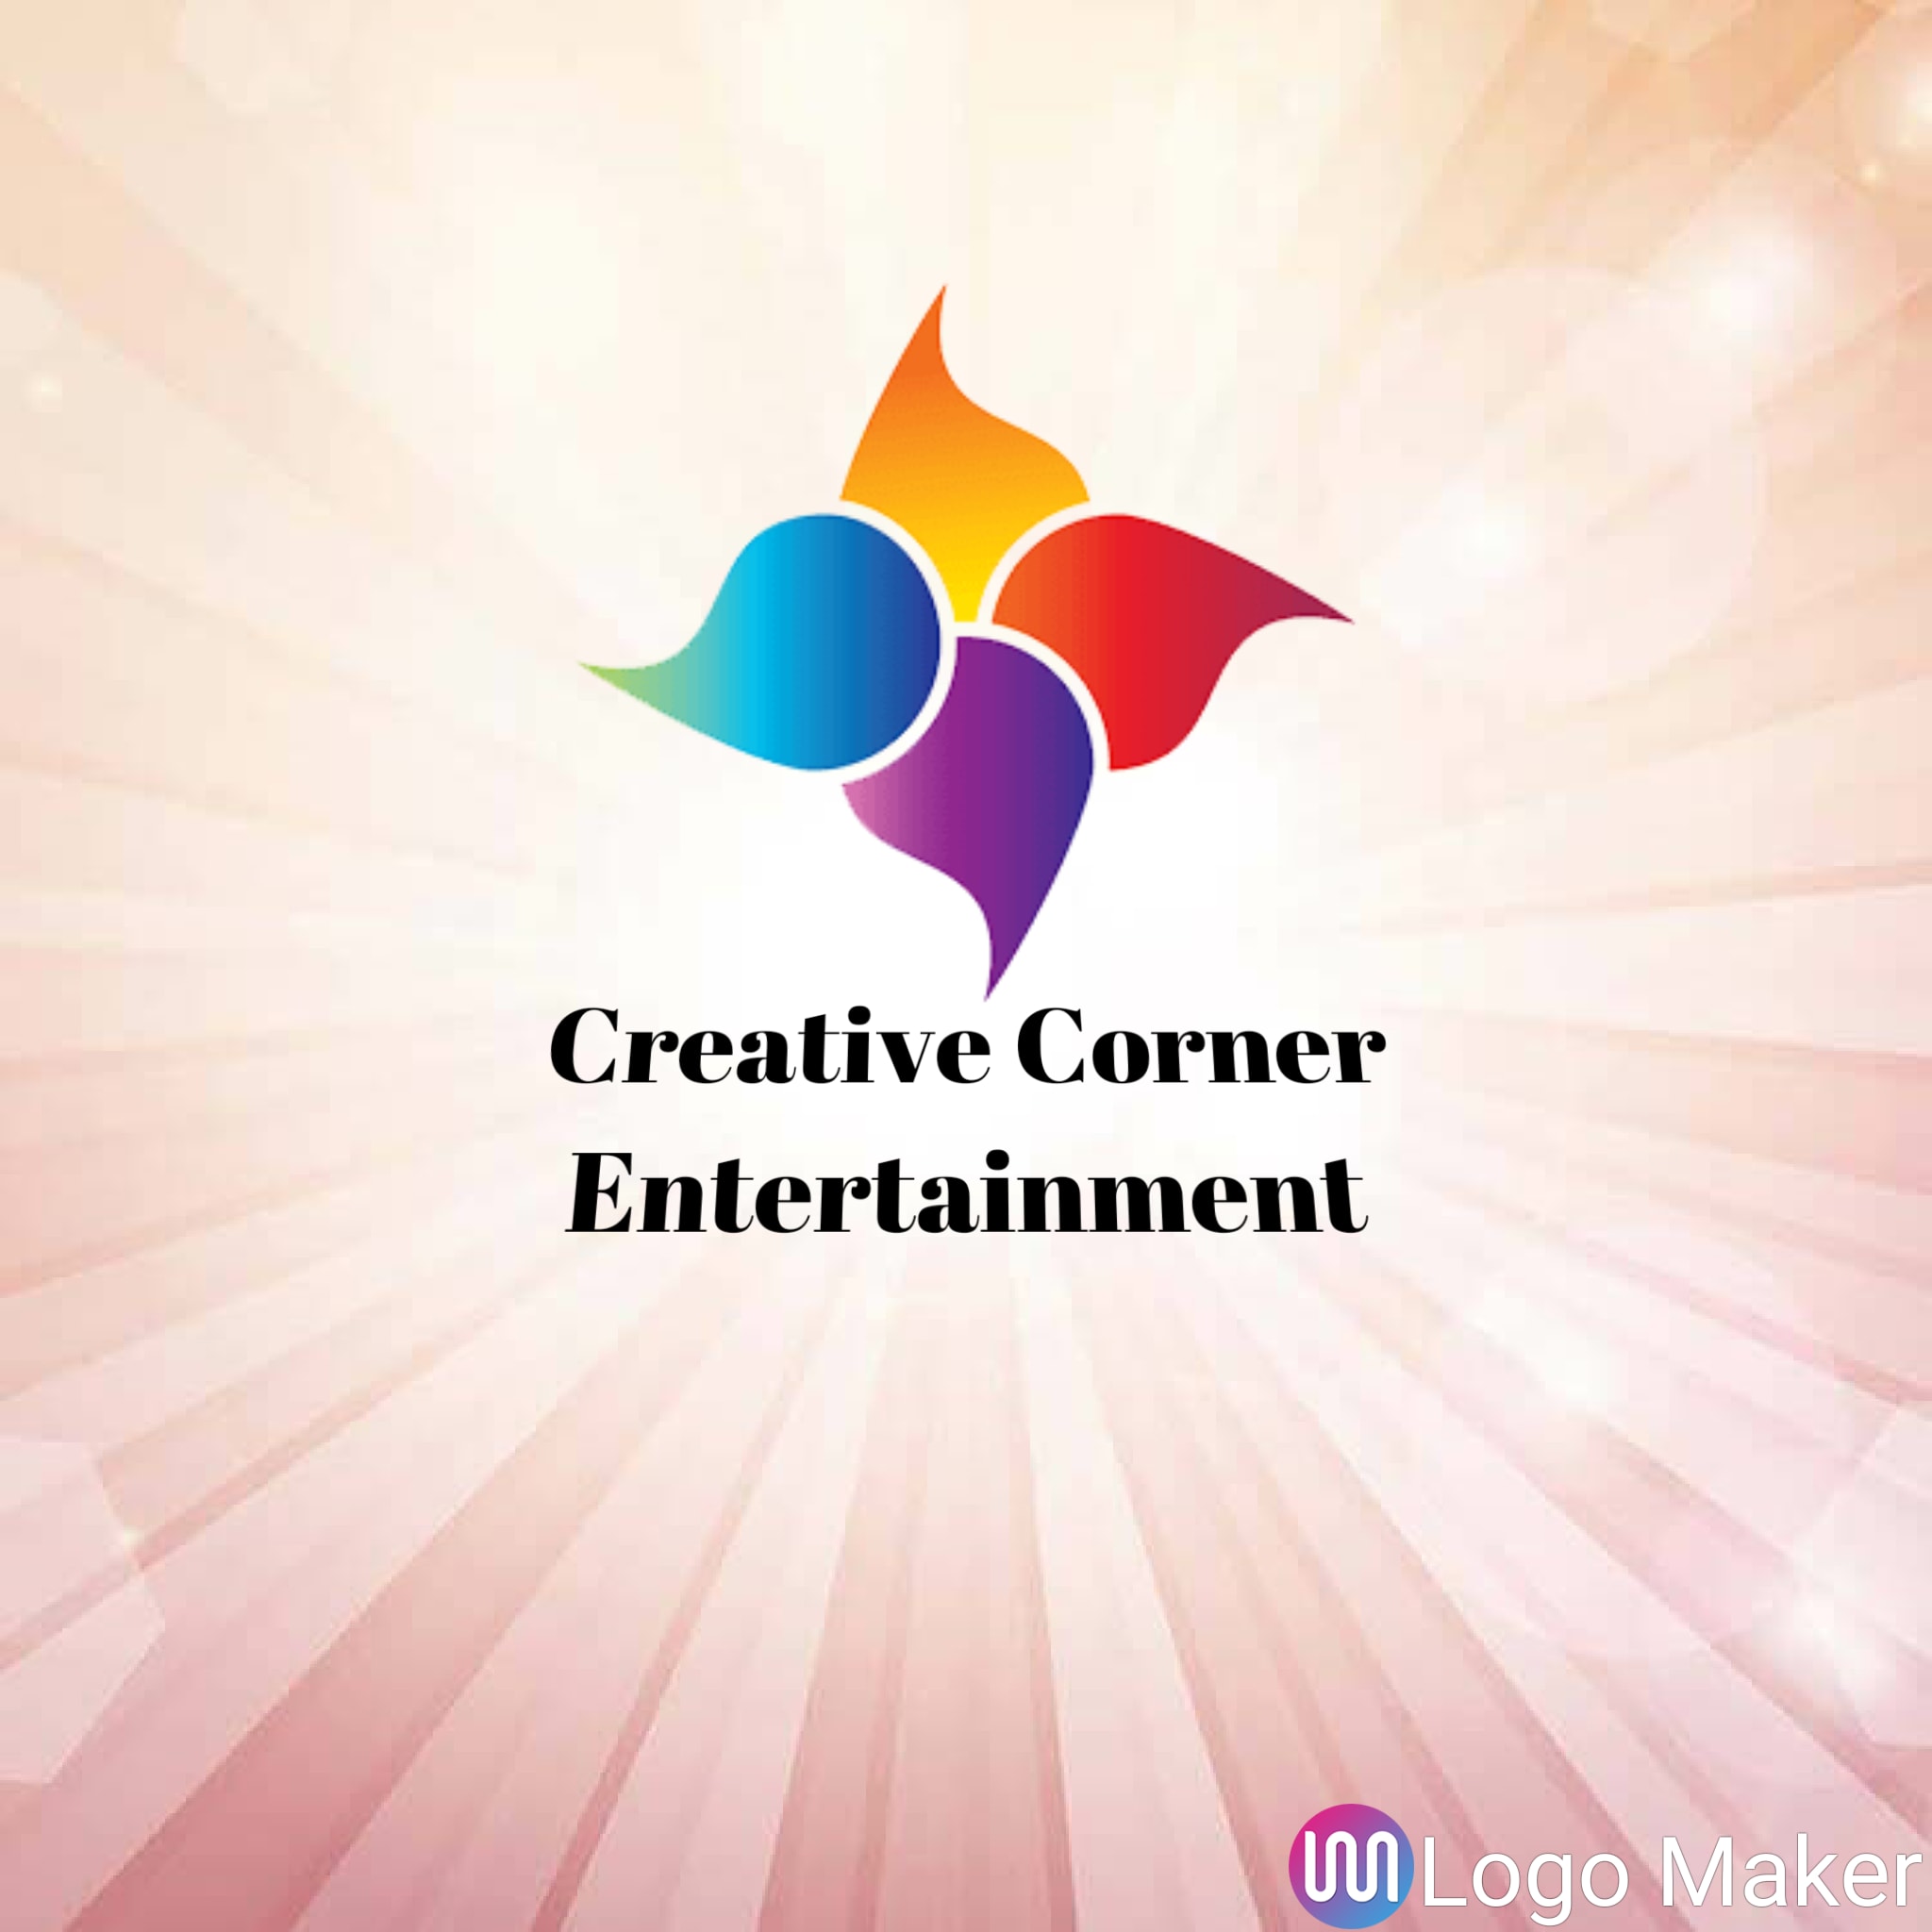 Creative Corner Entertainment